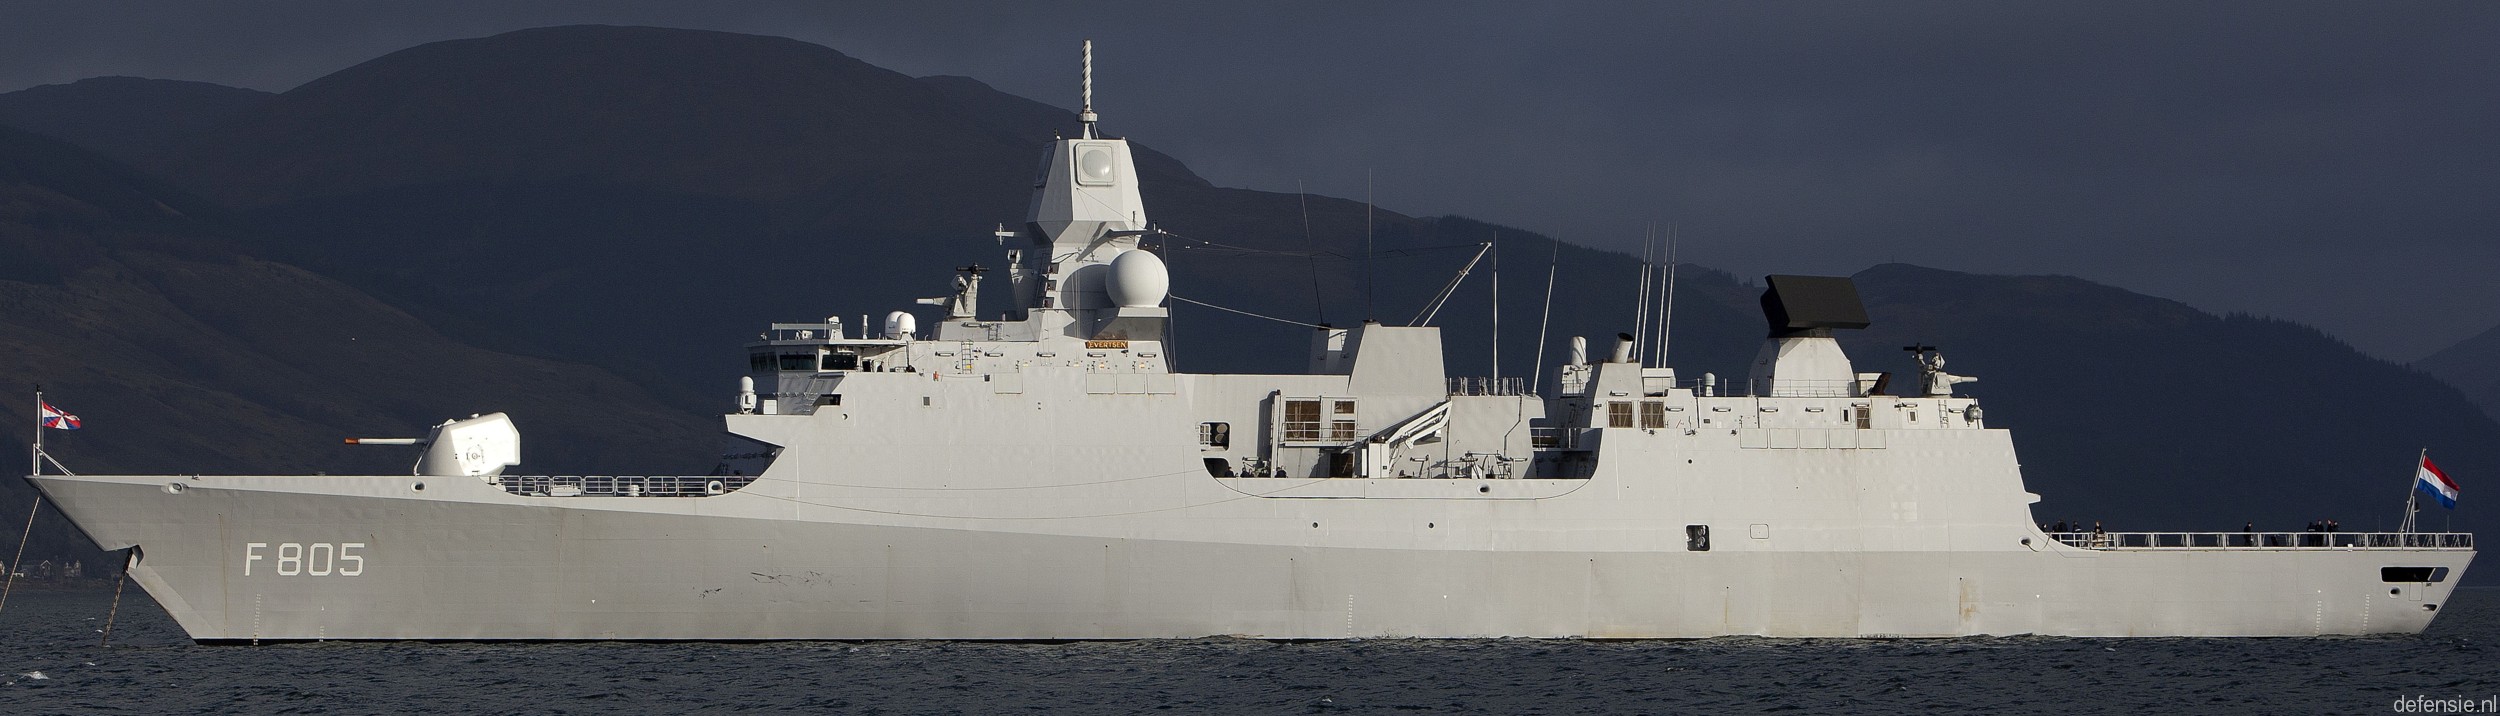 f-805 hnlms evertsen guided missile frigate ffg lcf royal netherlands navy 19